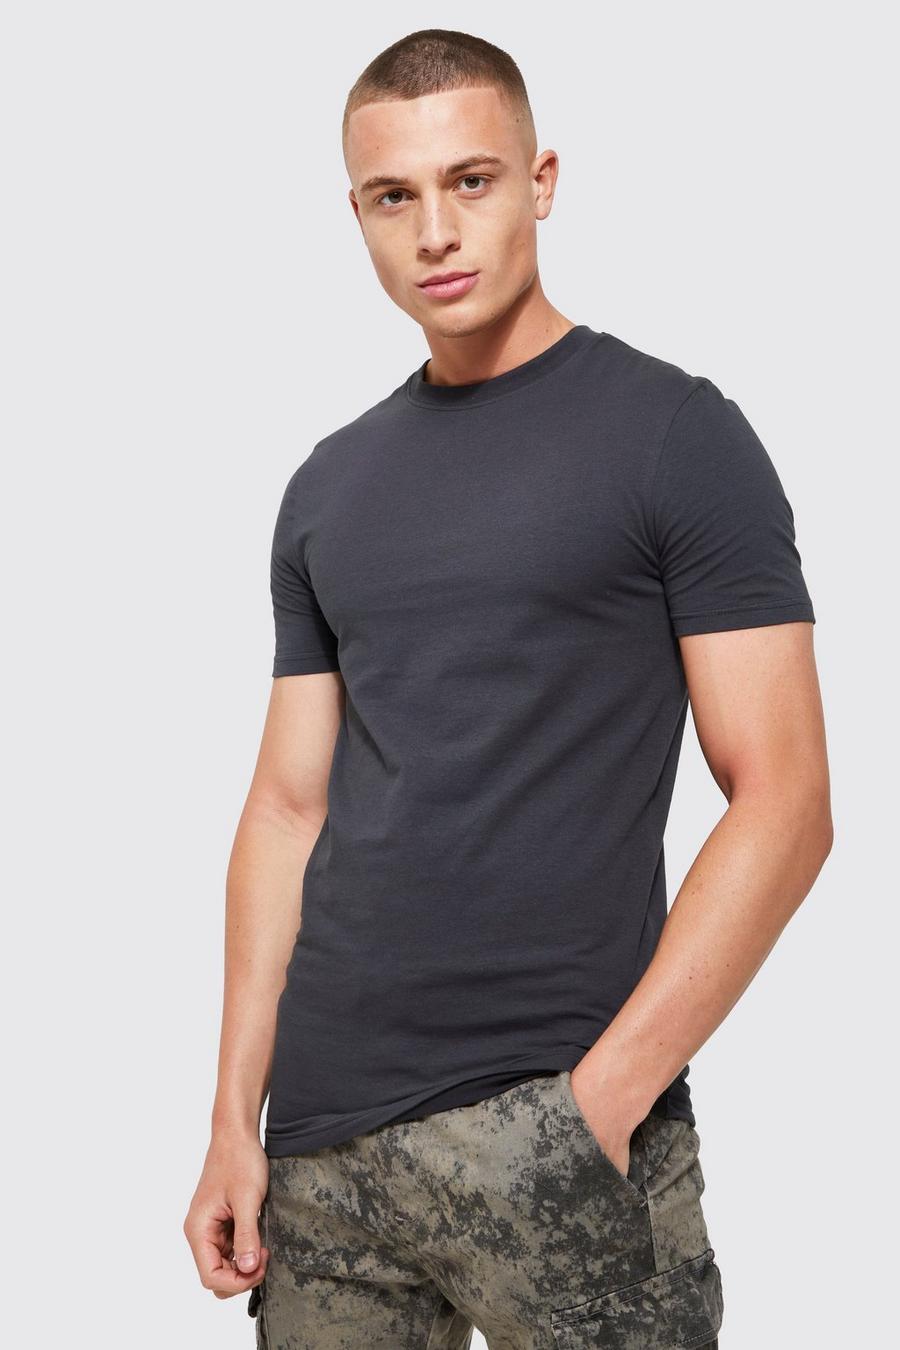 Charcoal gris Long Line Muscle Fit T-Shirt